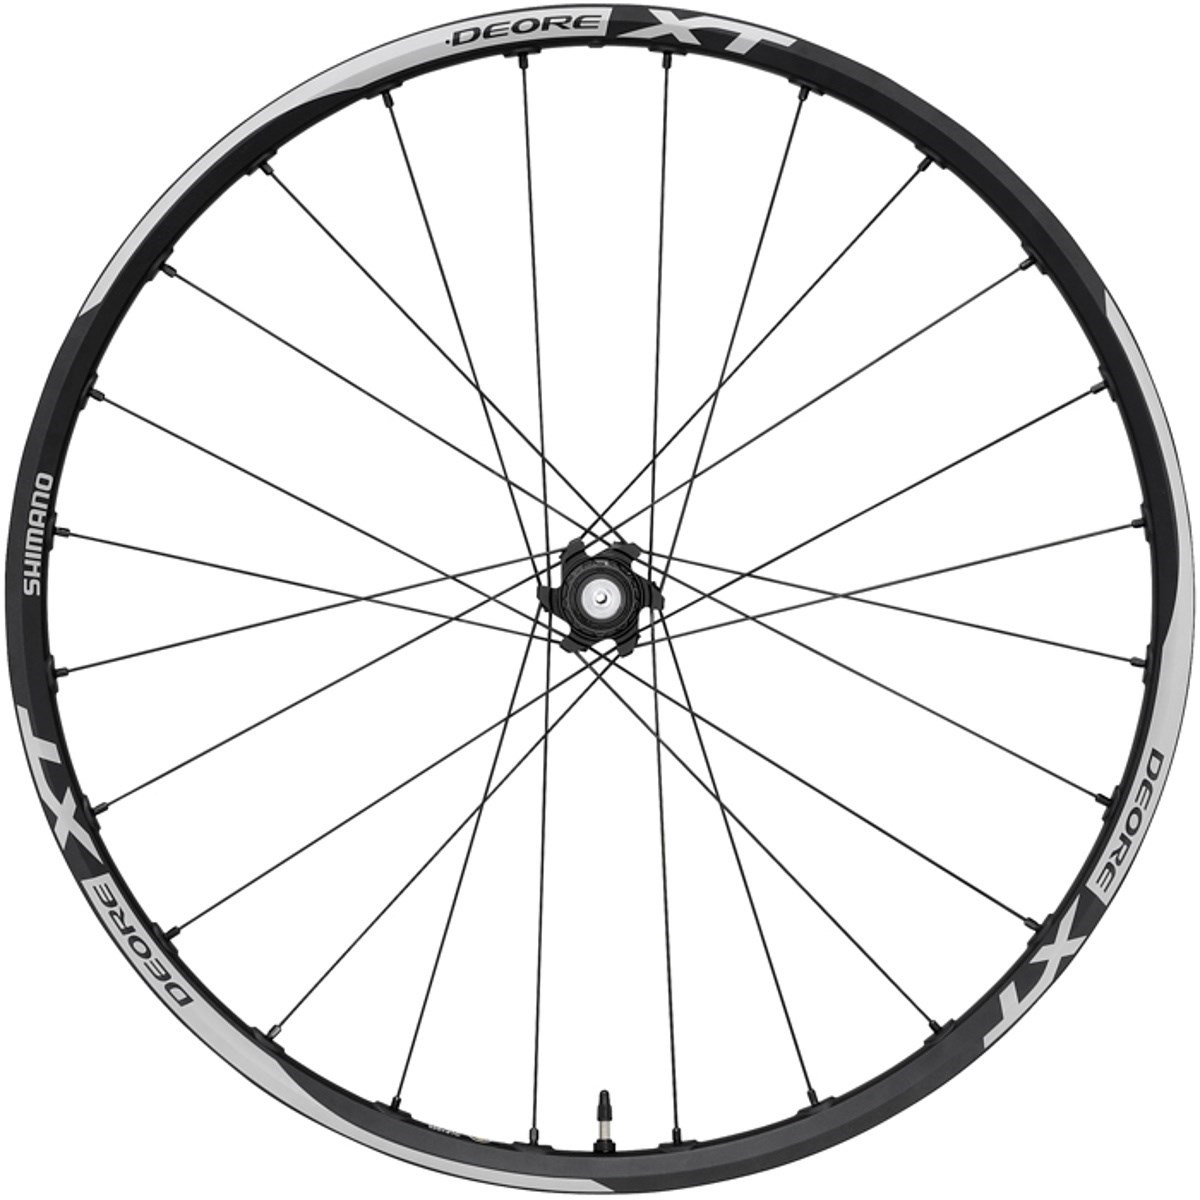 Shimano WH-M785 XT 29er Q/R 135mm Rear MTB Wheel product image